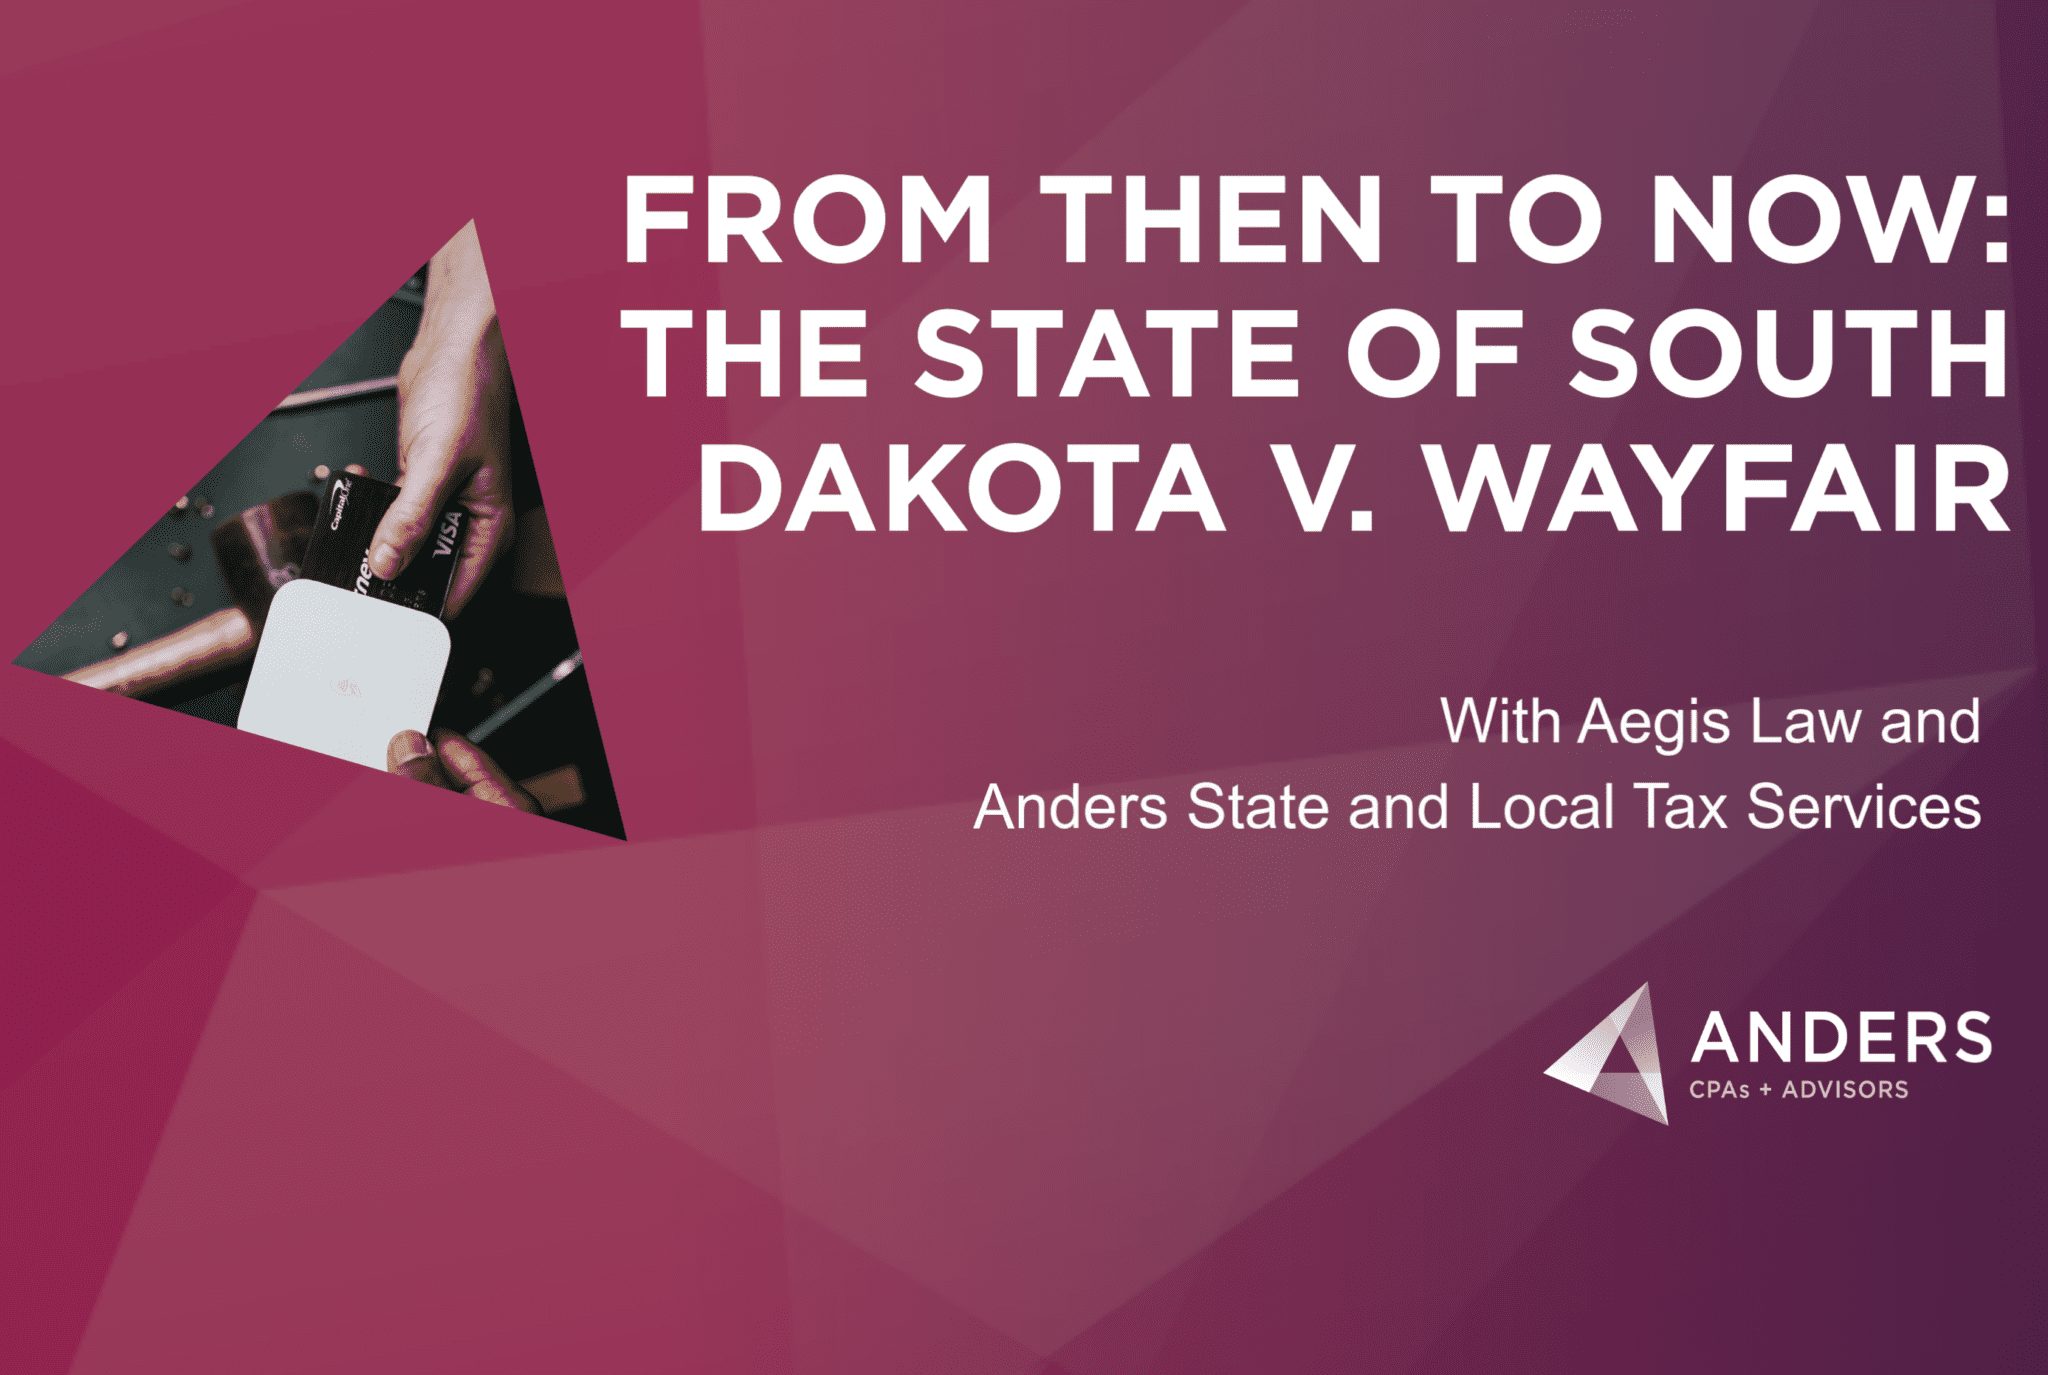 State and Local Tax Breakfast | South Dakota V. Wayfair 2019